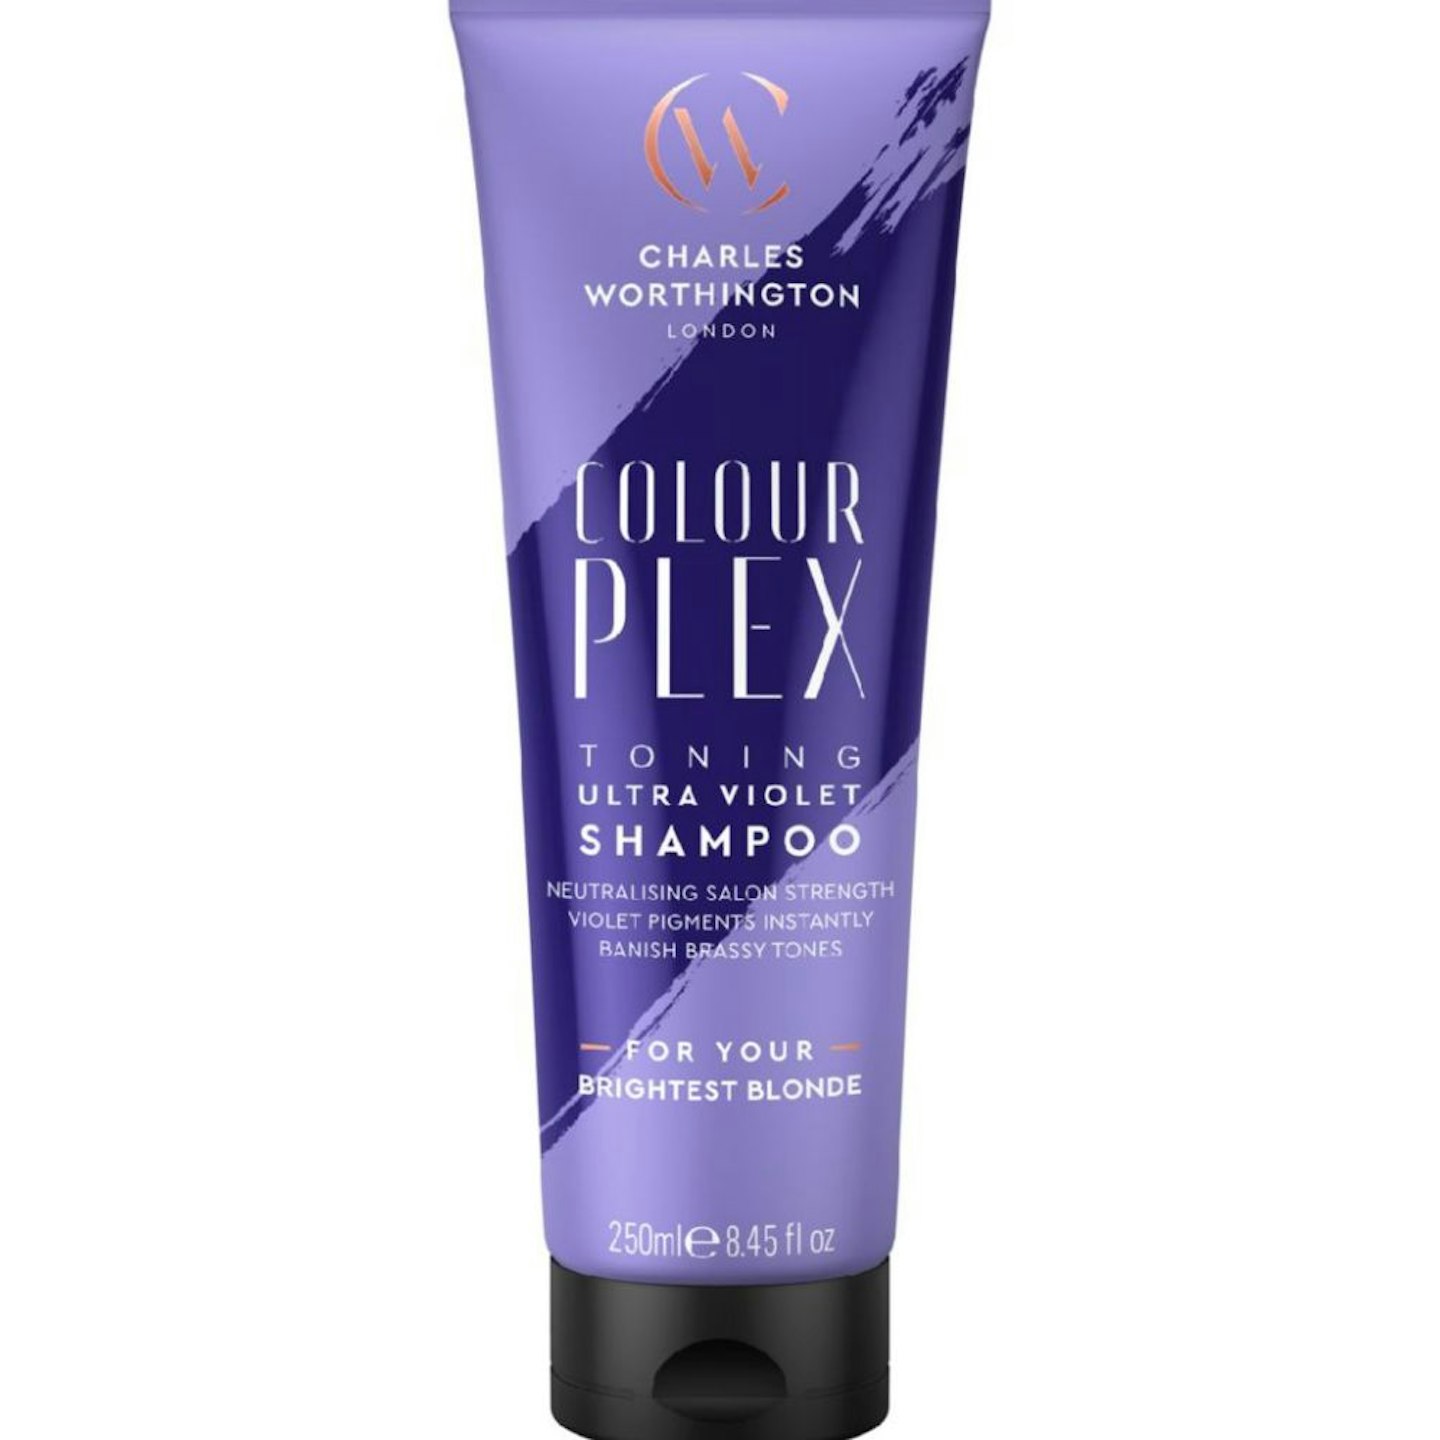 Charles Worthington Colourplex Ultra Violet Shampoo 250ml